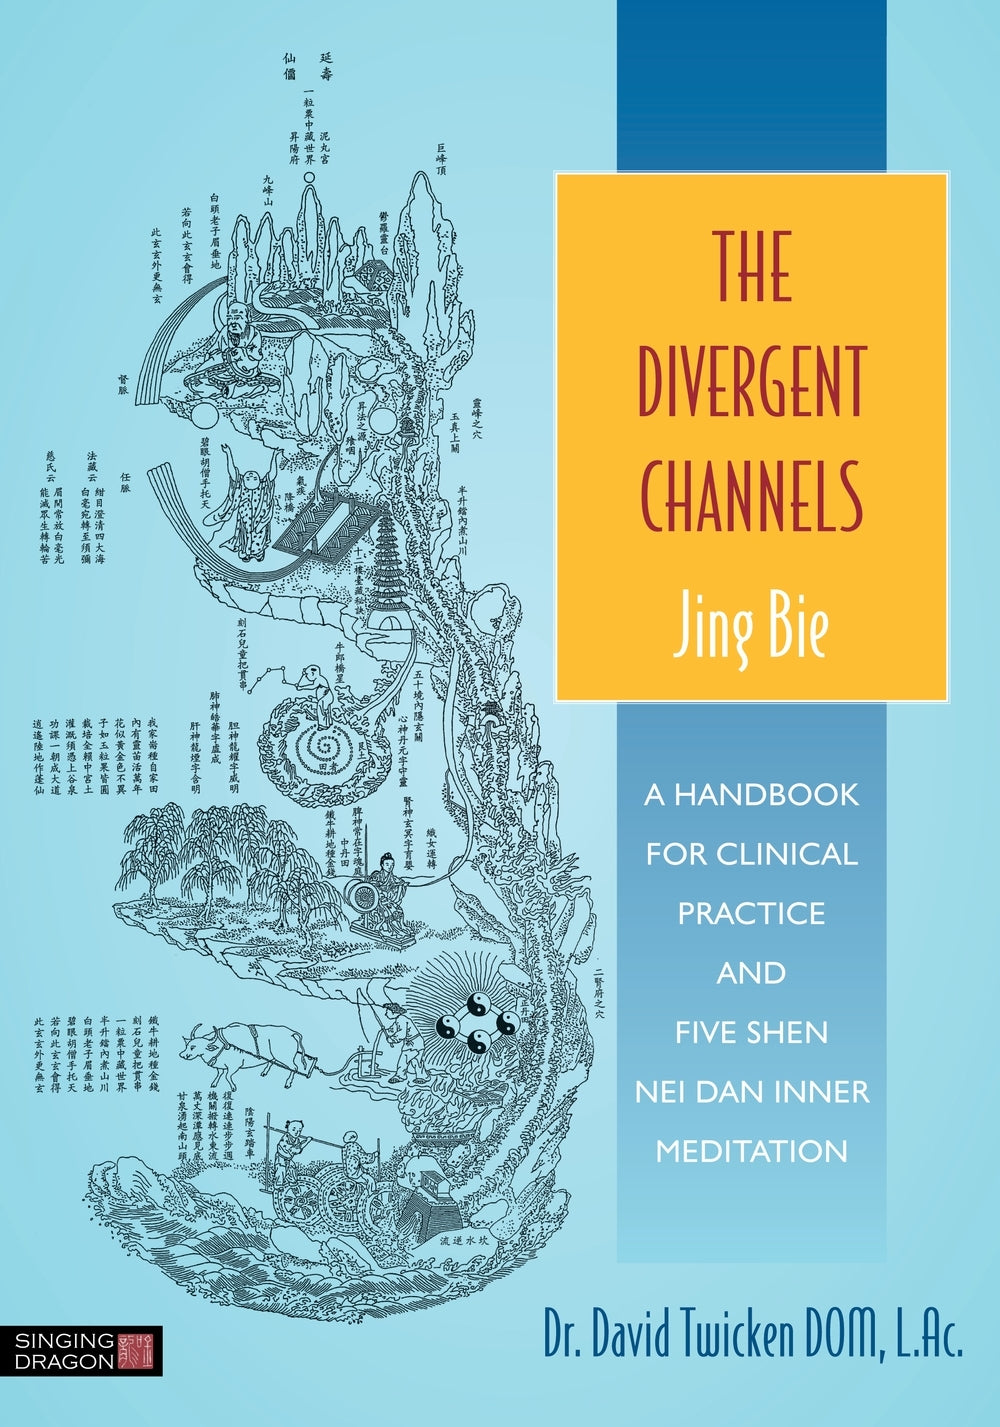 The Divergent Channels - Jing Bie by David Twicken